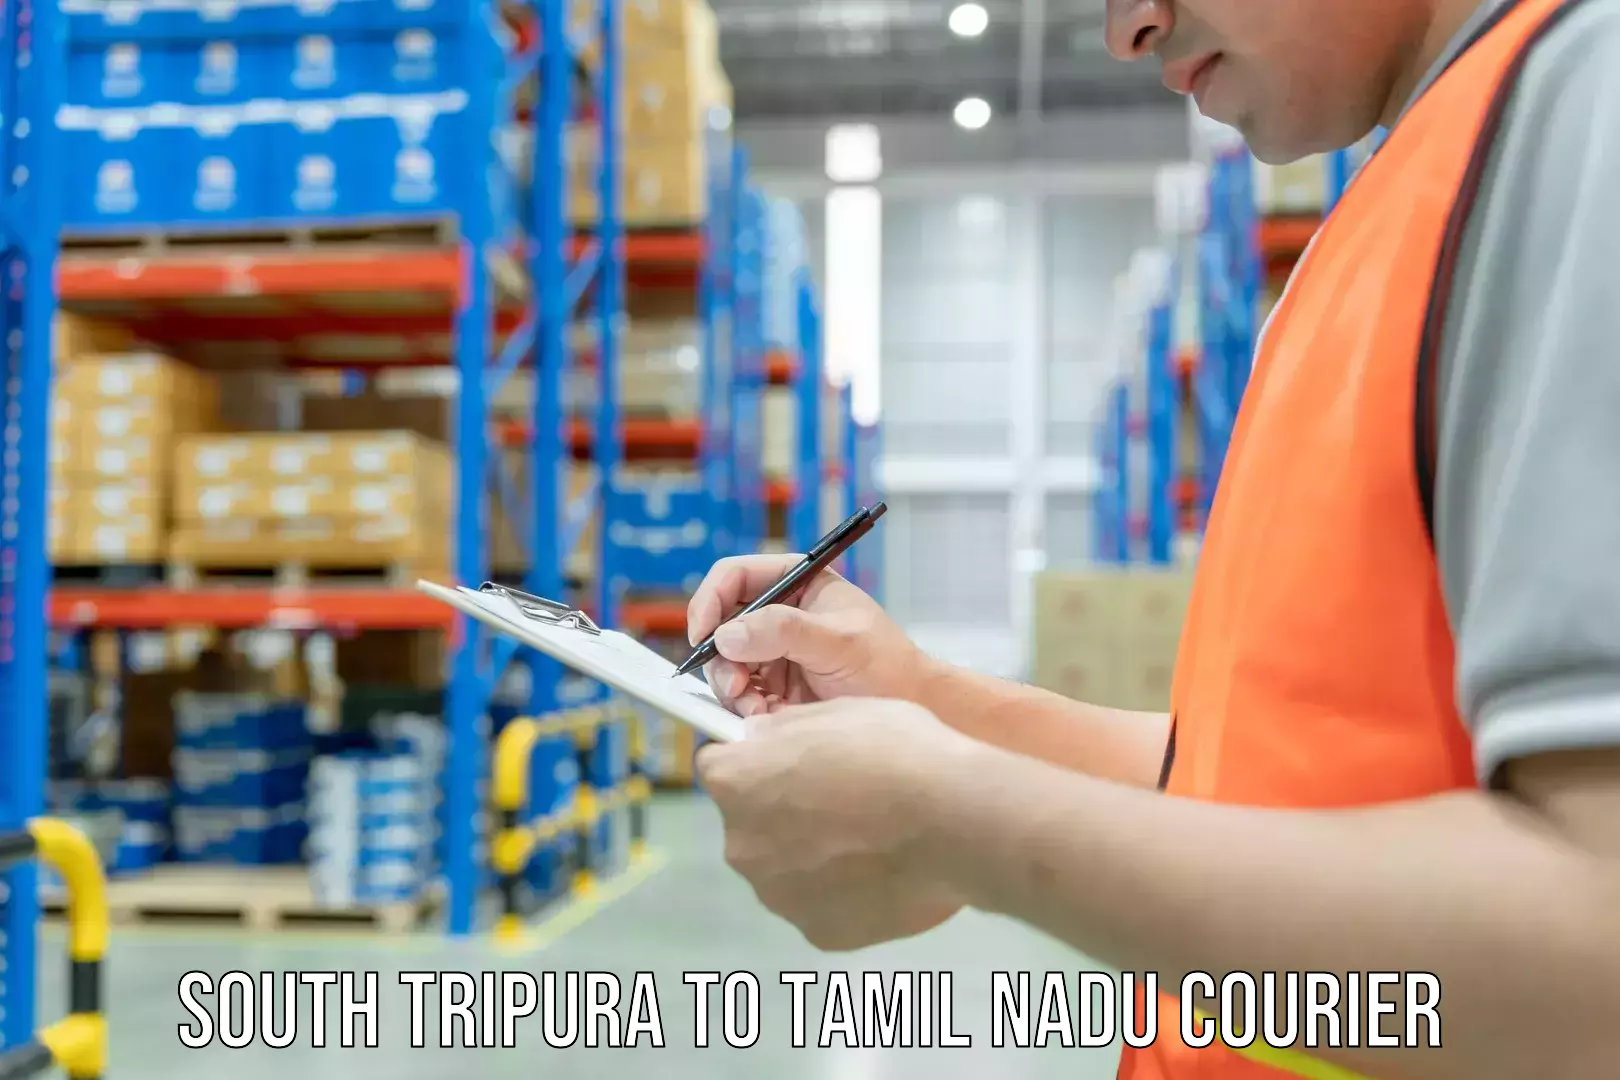 24/7 courier service South Tripura to Tamil Nadu